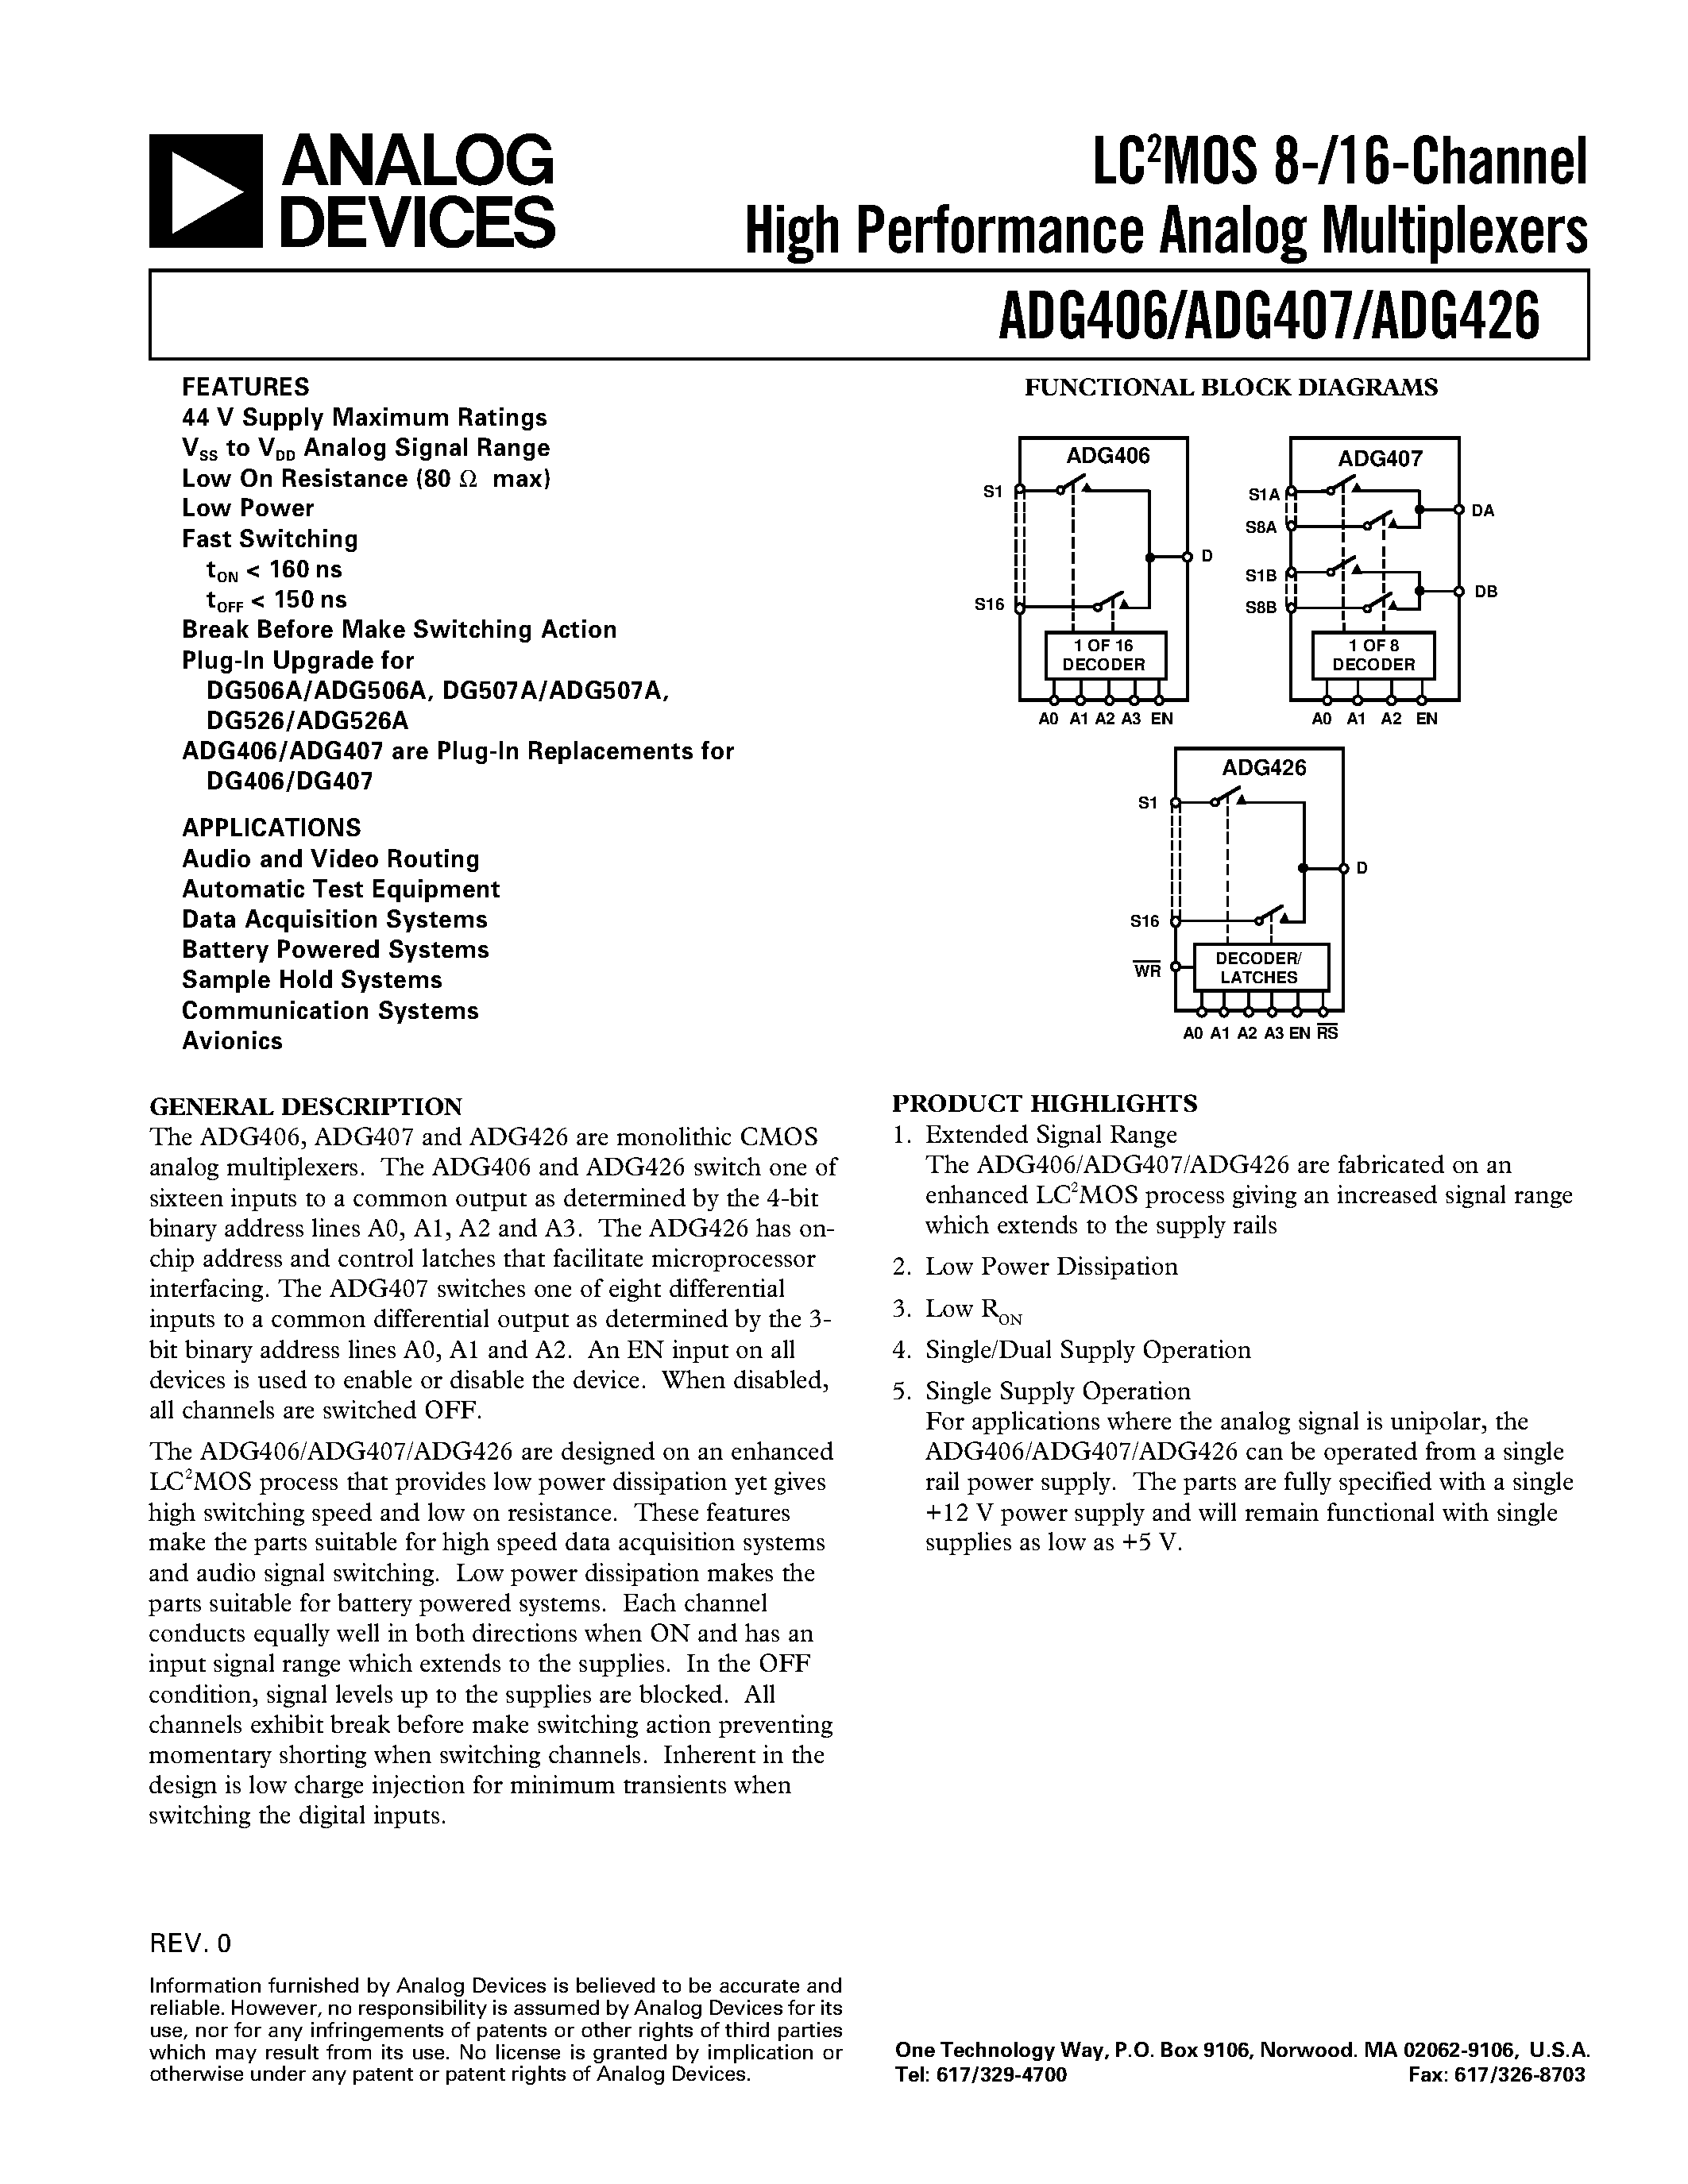 Даташит ADG406BP - LC2MOS 8-/16-Channel High Performance Analog Multiplexers страница 1